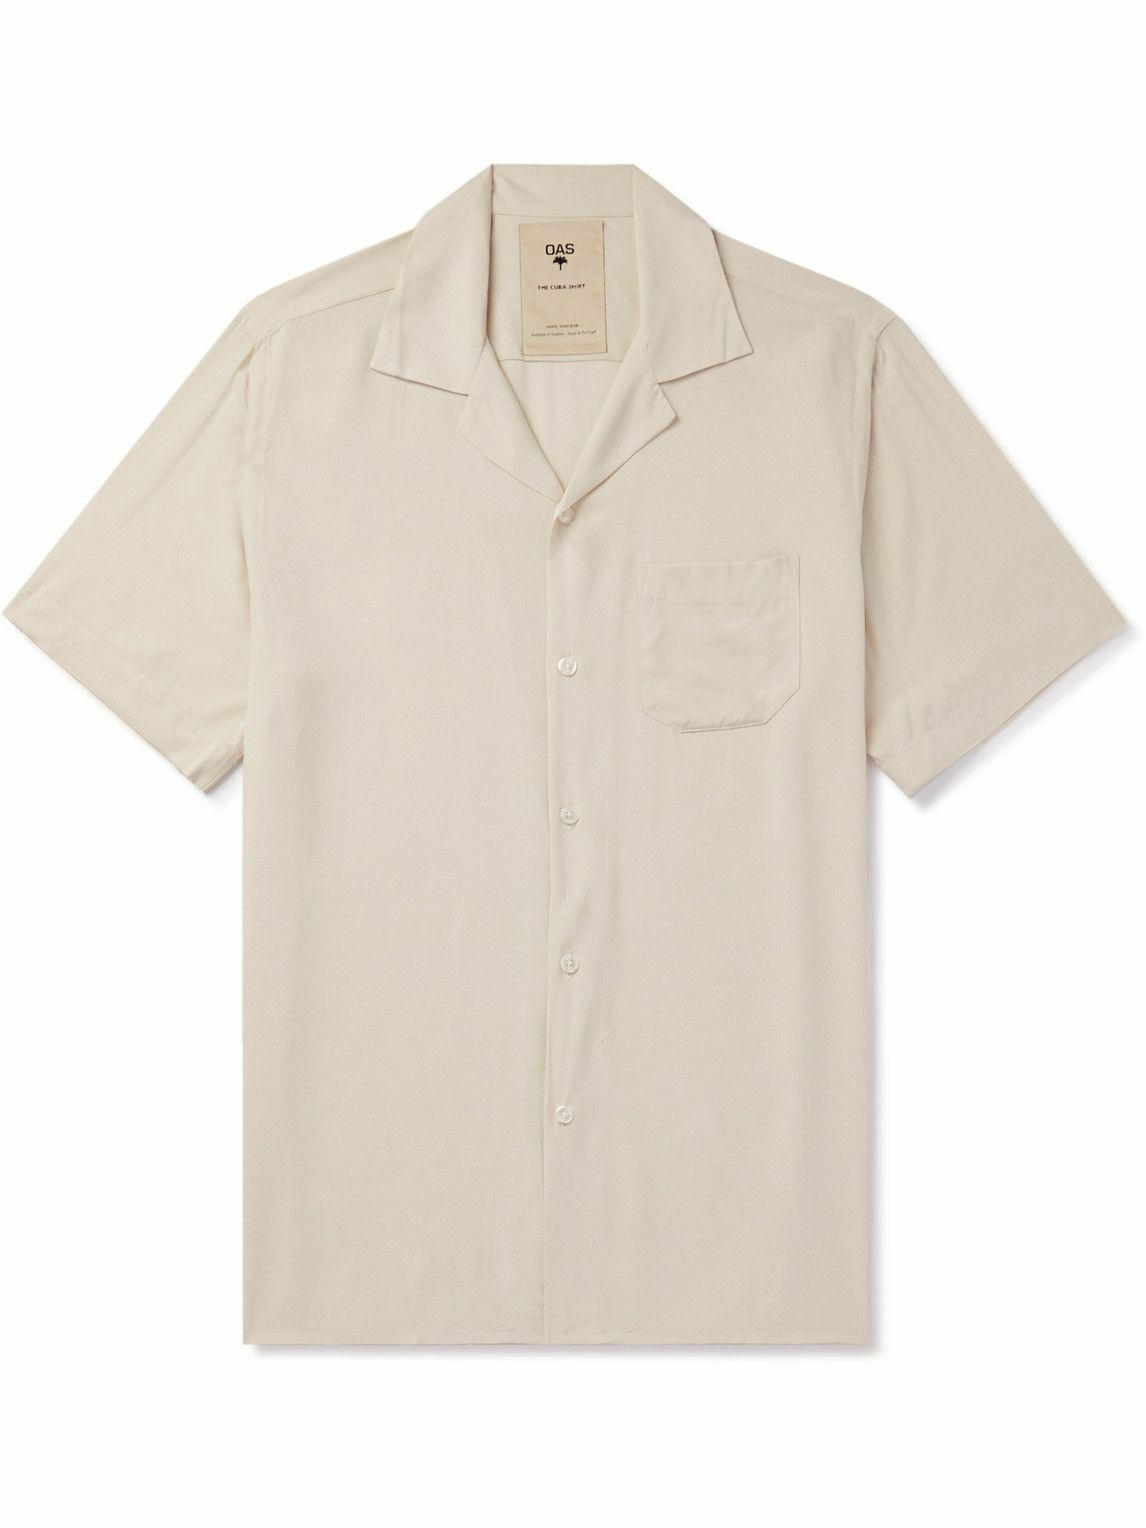 OAS - The Cuba Camp-Collar Woven Shirt - Neutrals OAS